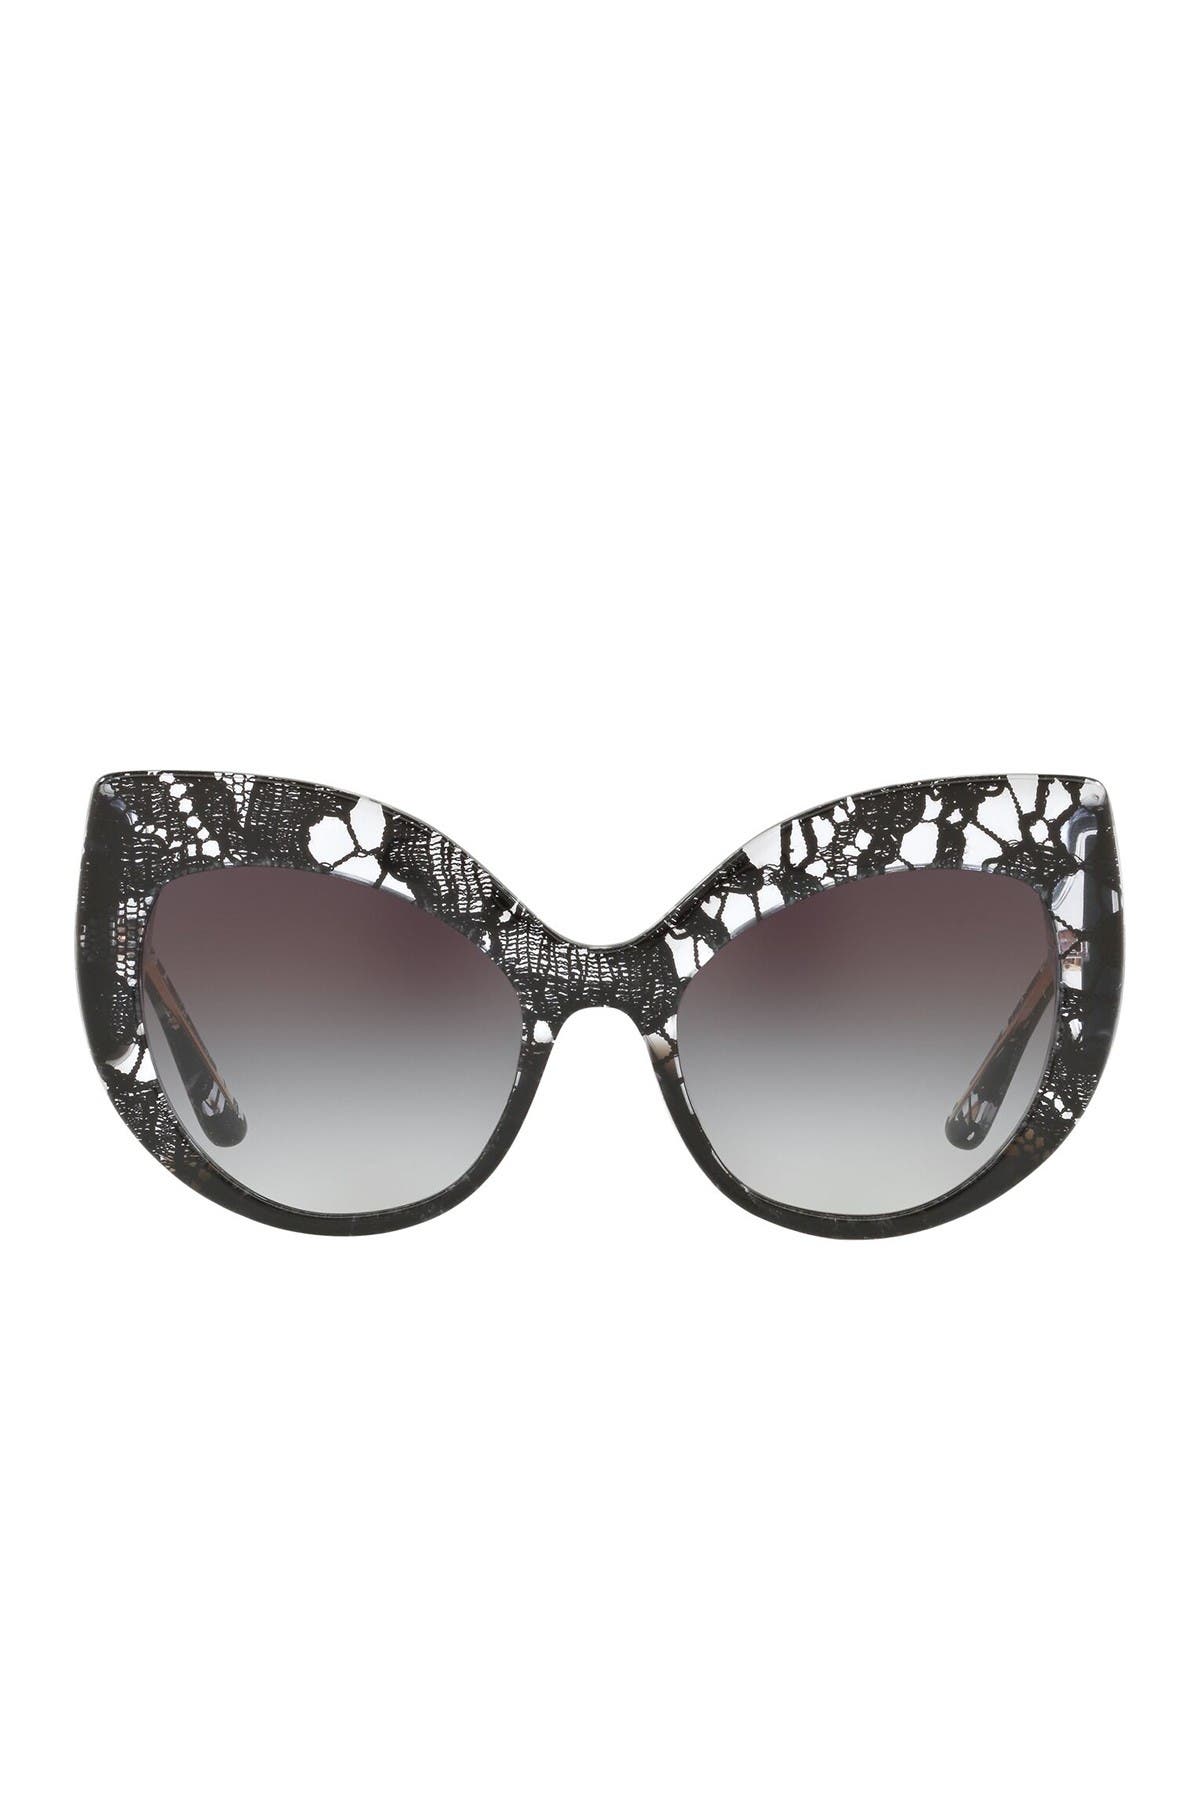 dolce and gabbana jeweled sunglasses